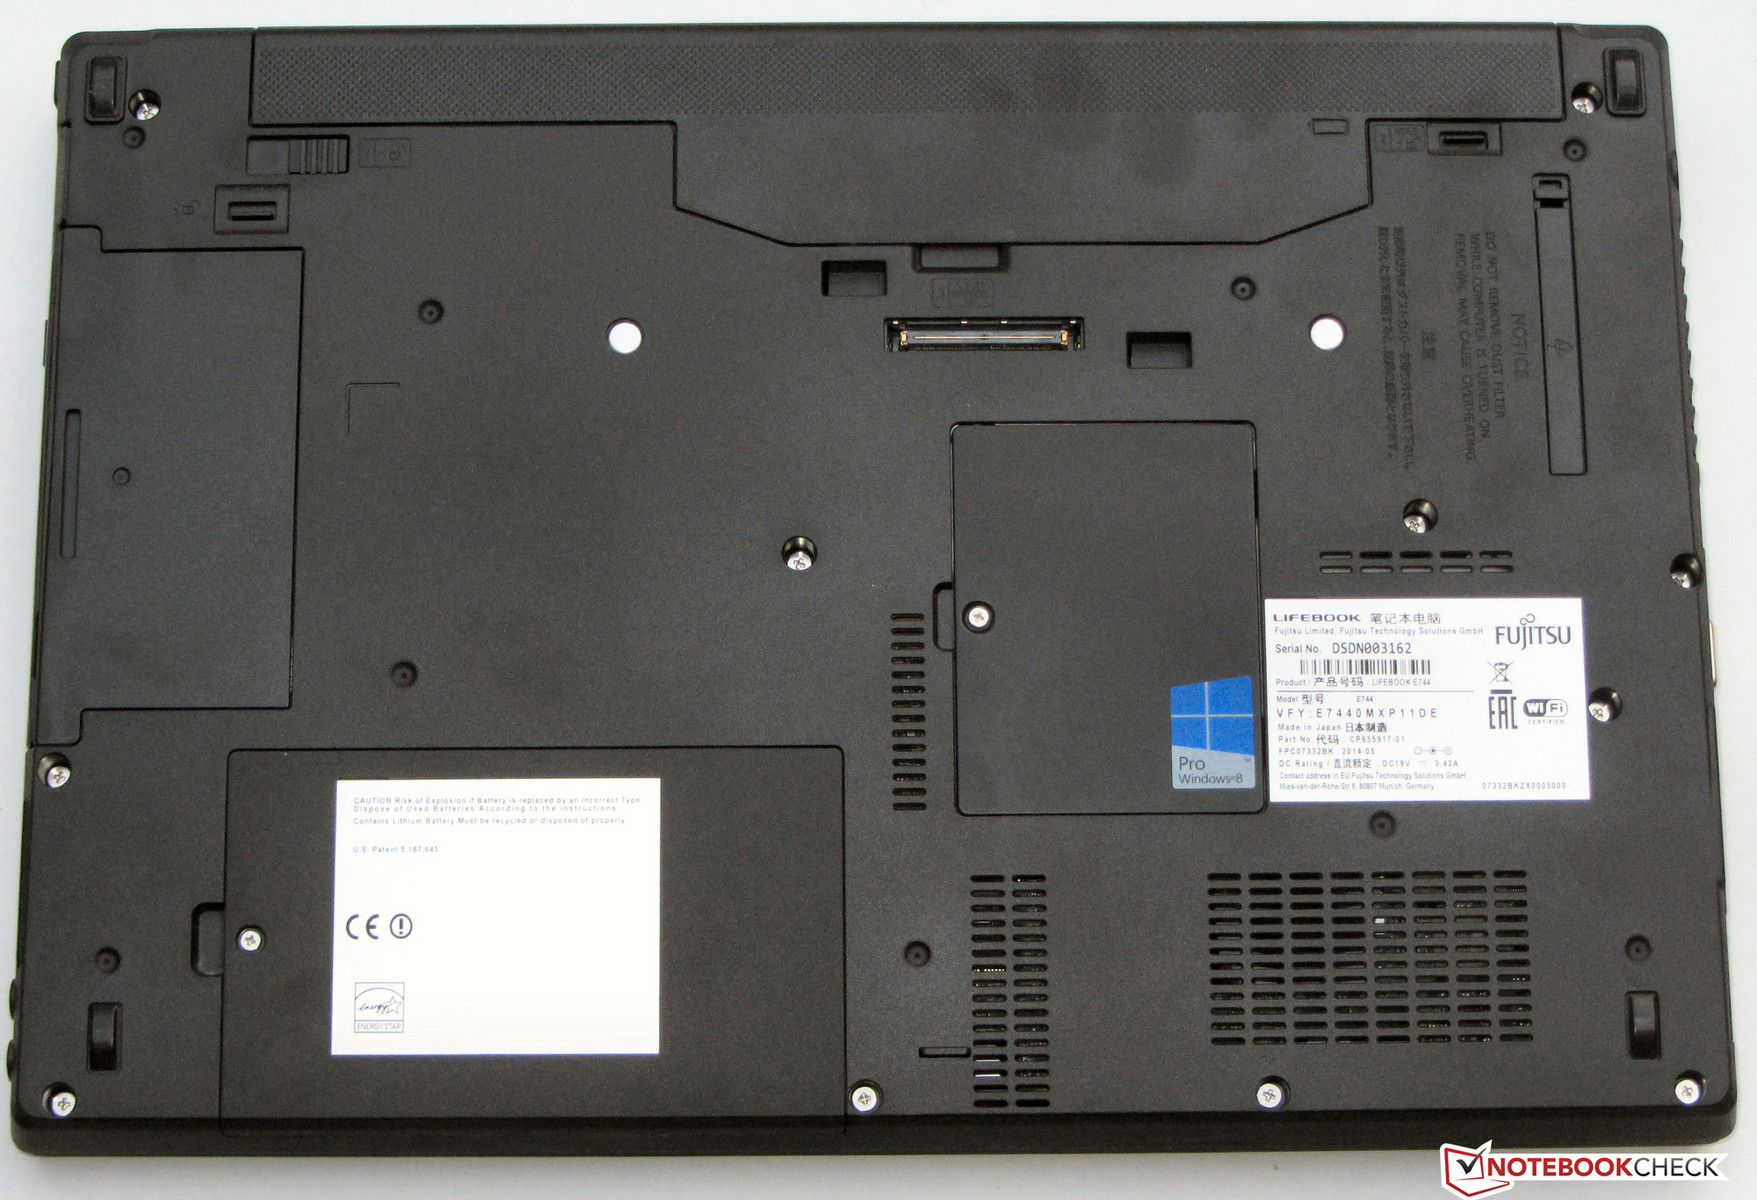 Fujitsu Lifebook E744 (E7440MXP11DE) Notebook Review Update